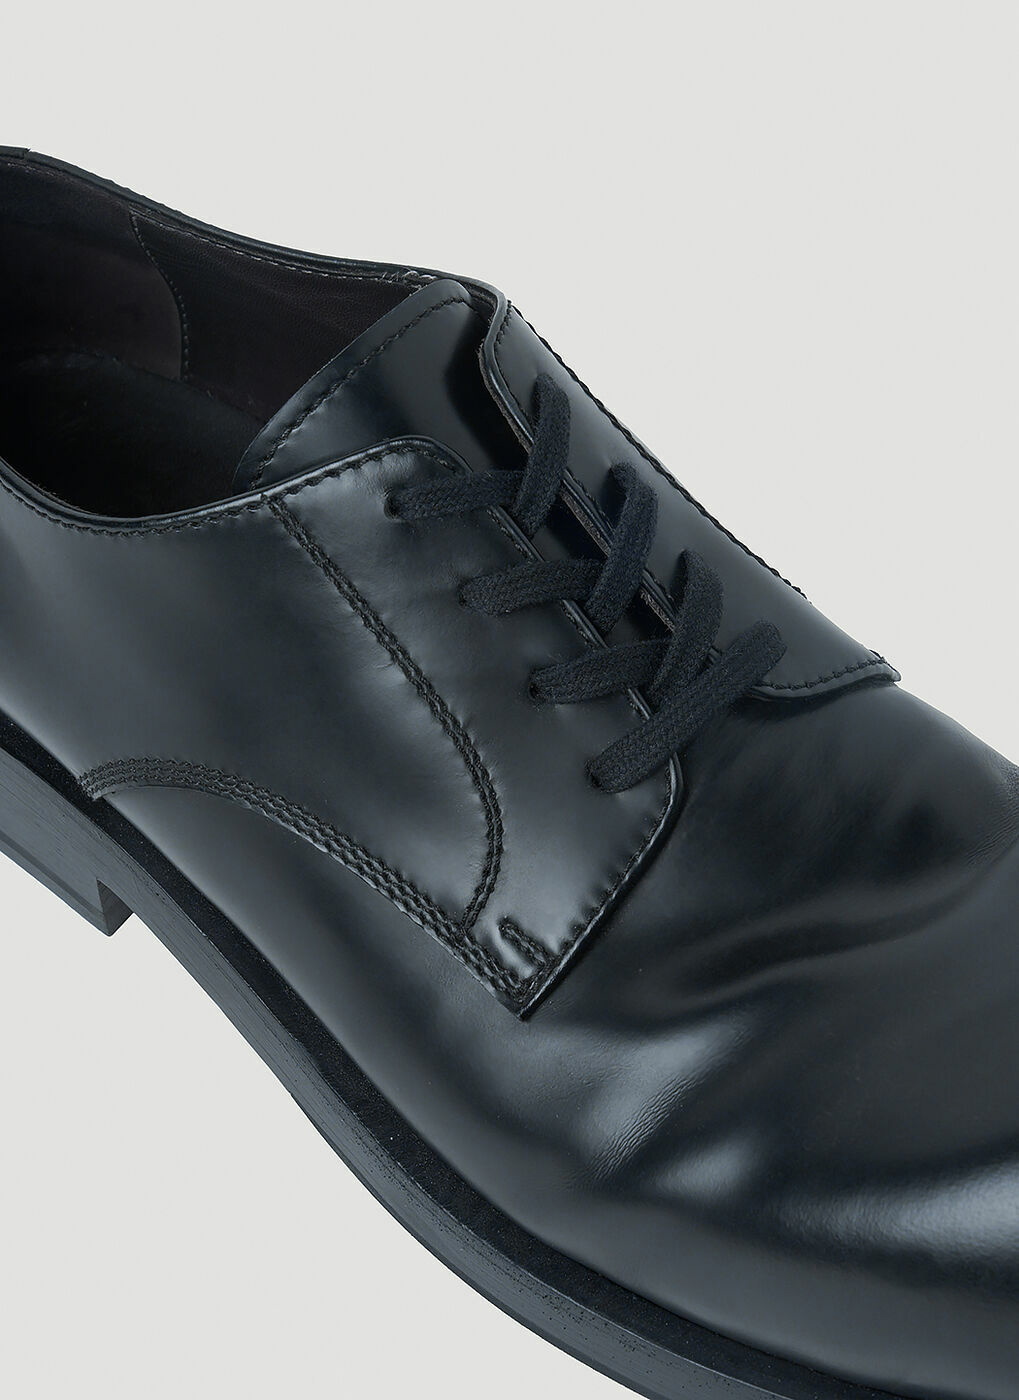 Black Tokyo leather Derby shoes, Bottega Veneta